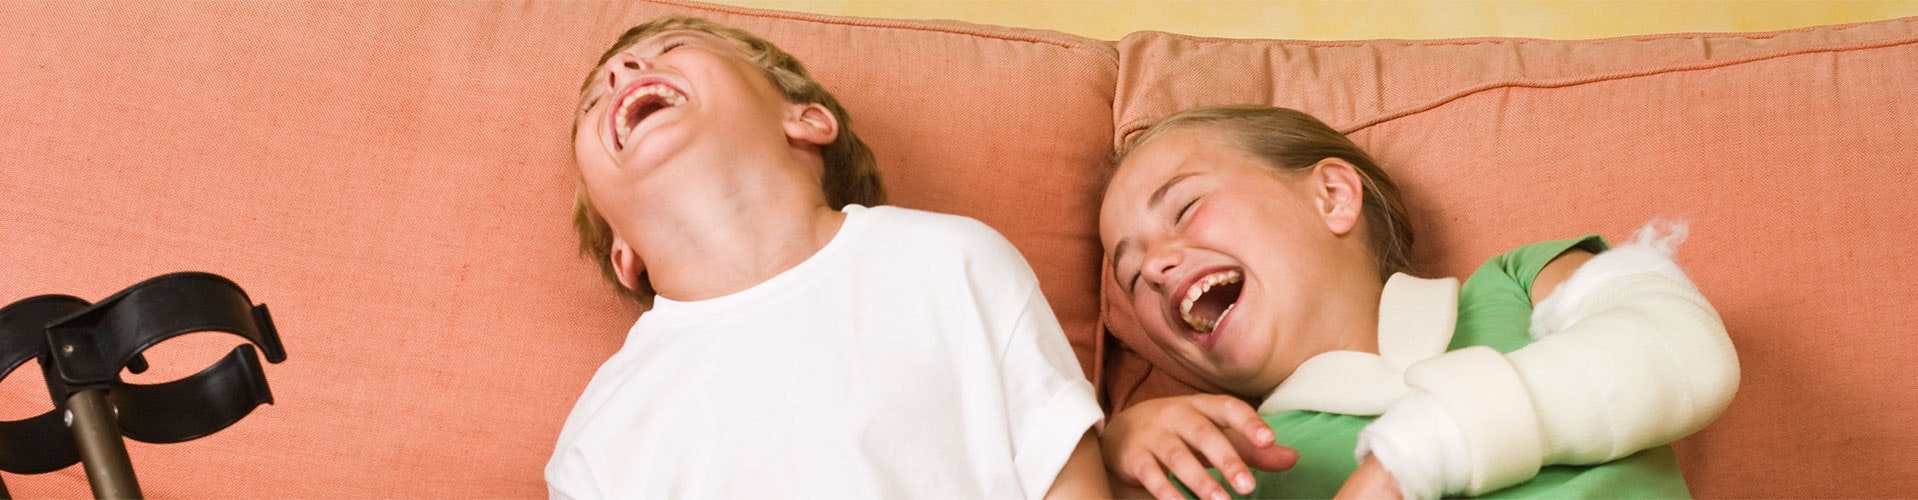 RMN e implantes cocleares – Niños riendo